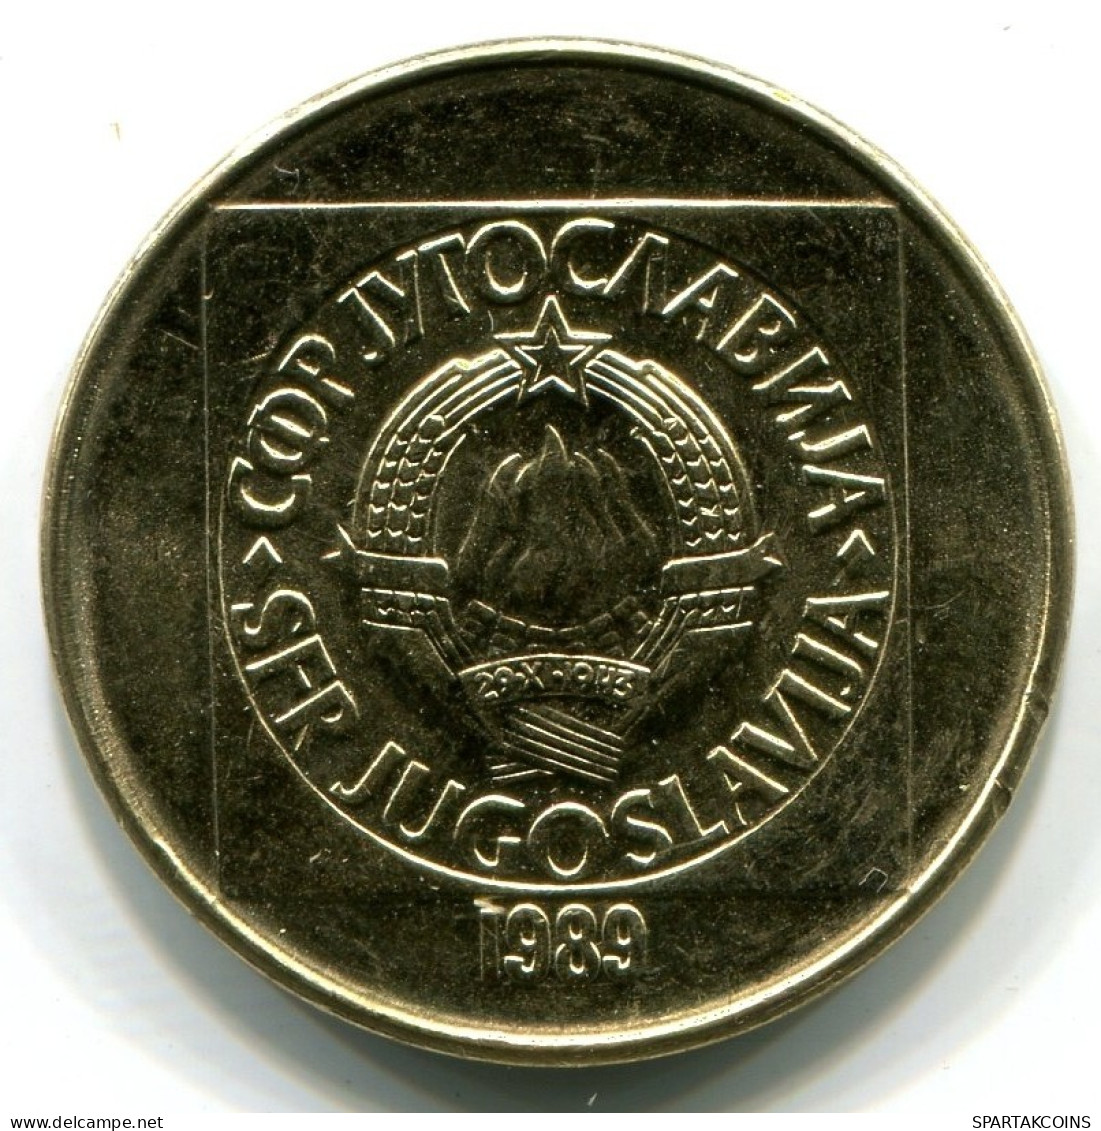 100 DINARA 1989 JUGOSLAWIEN YUGOSLAVIA UNC Münze #W11259.D.A - Jugoslavia